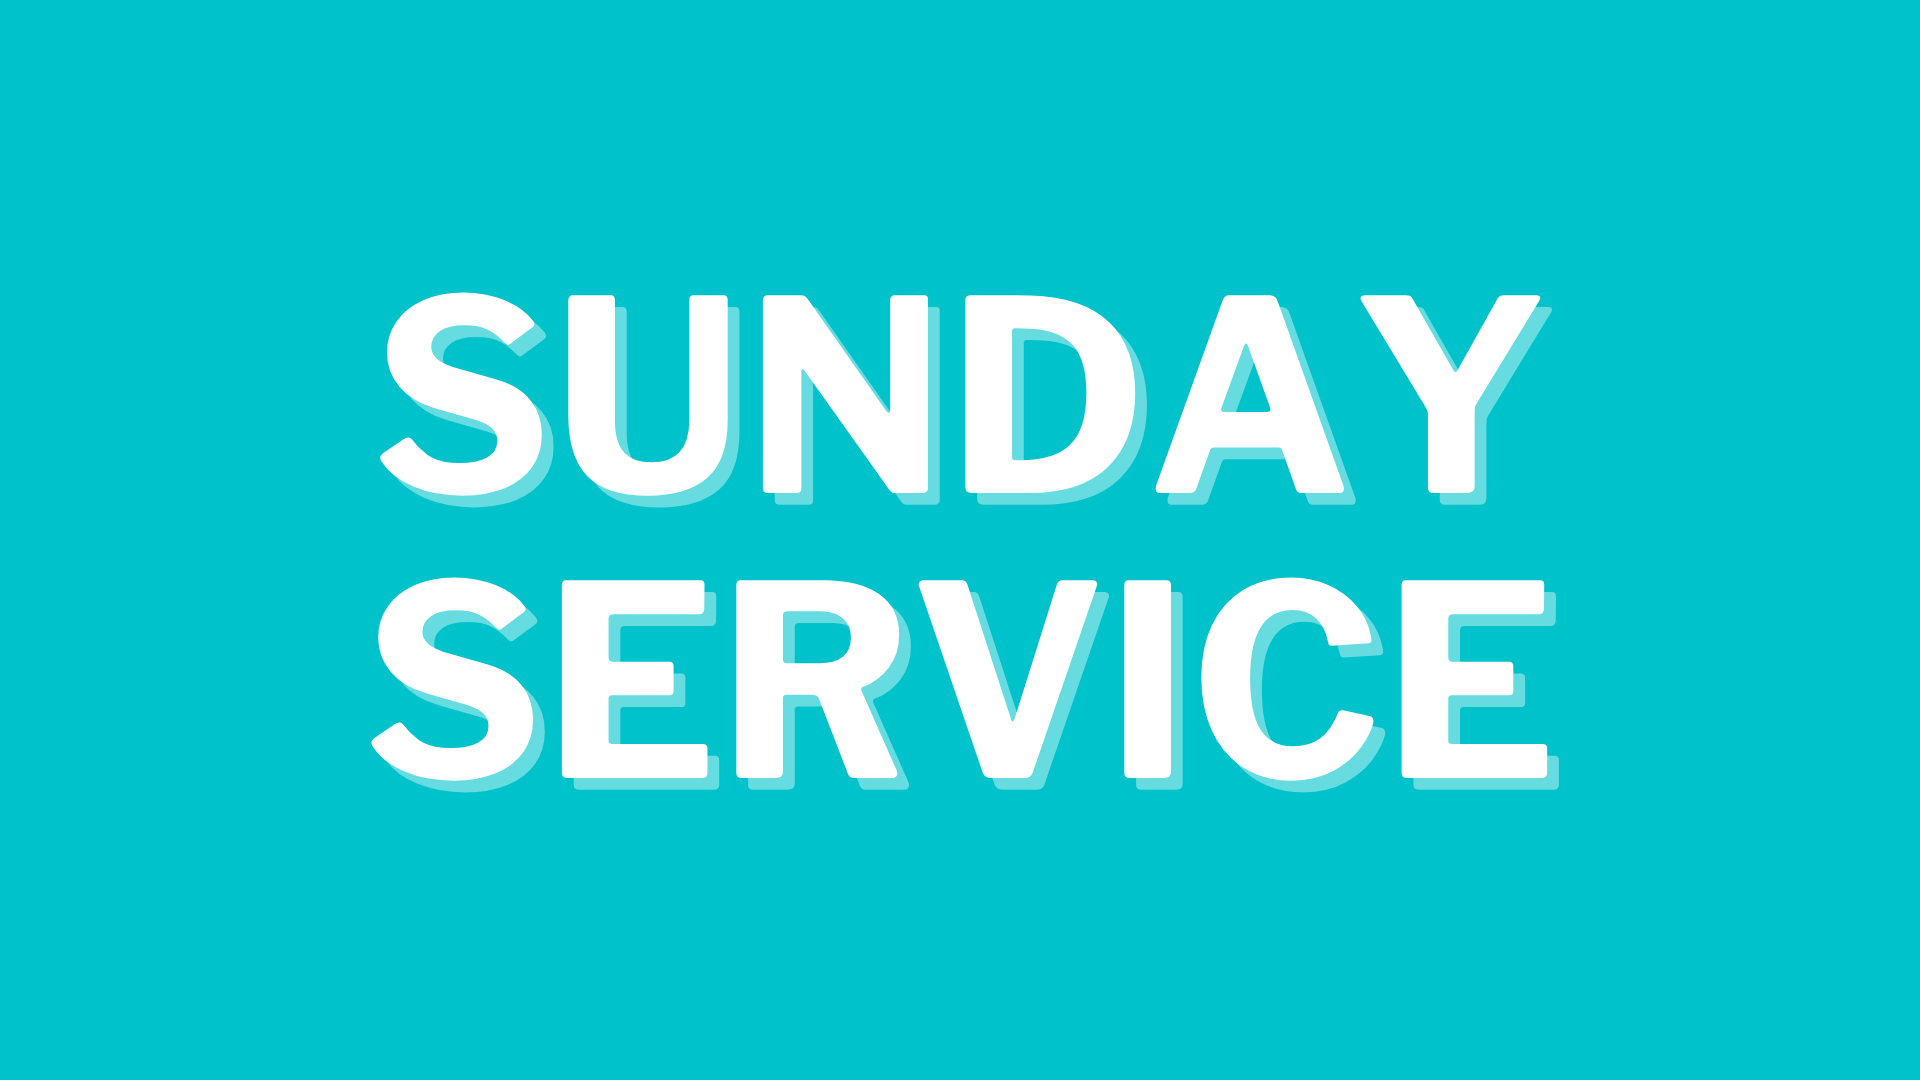 English Sunday Service (Copy)